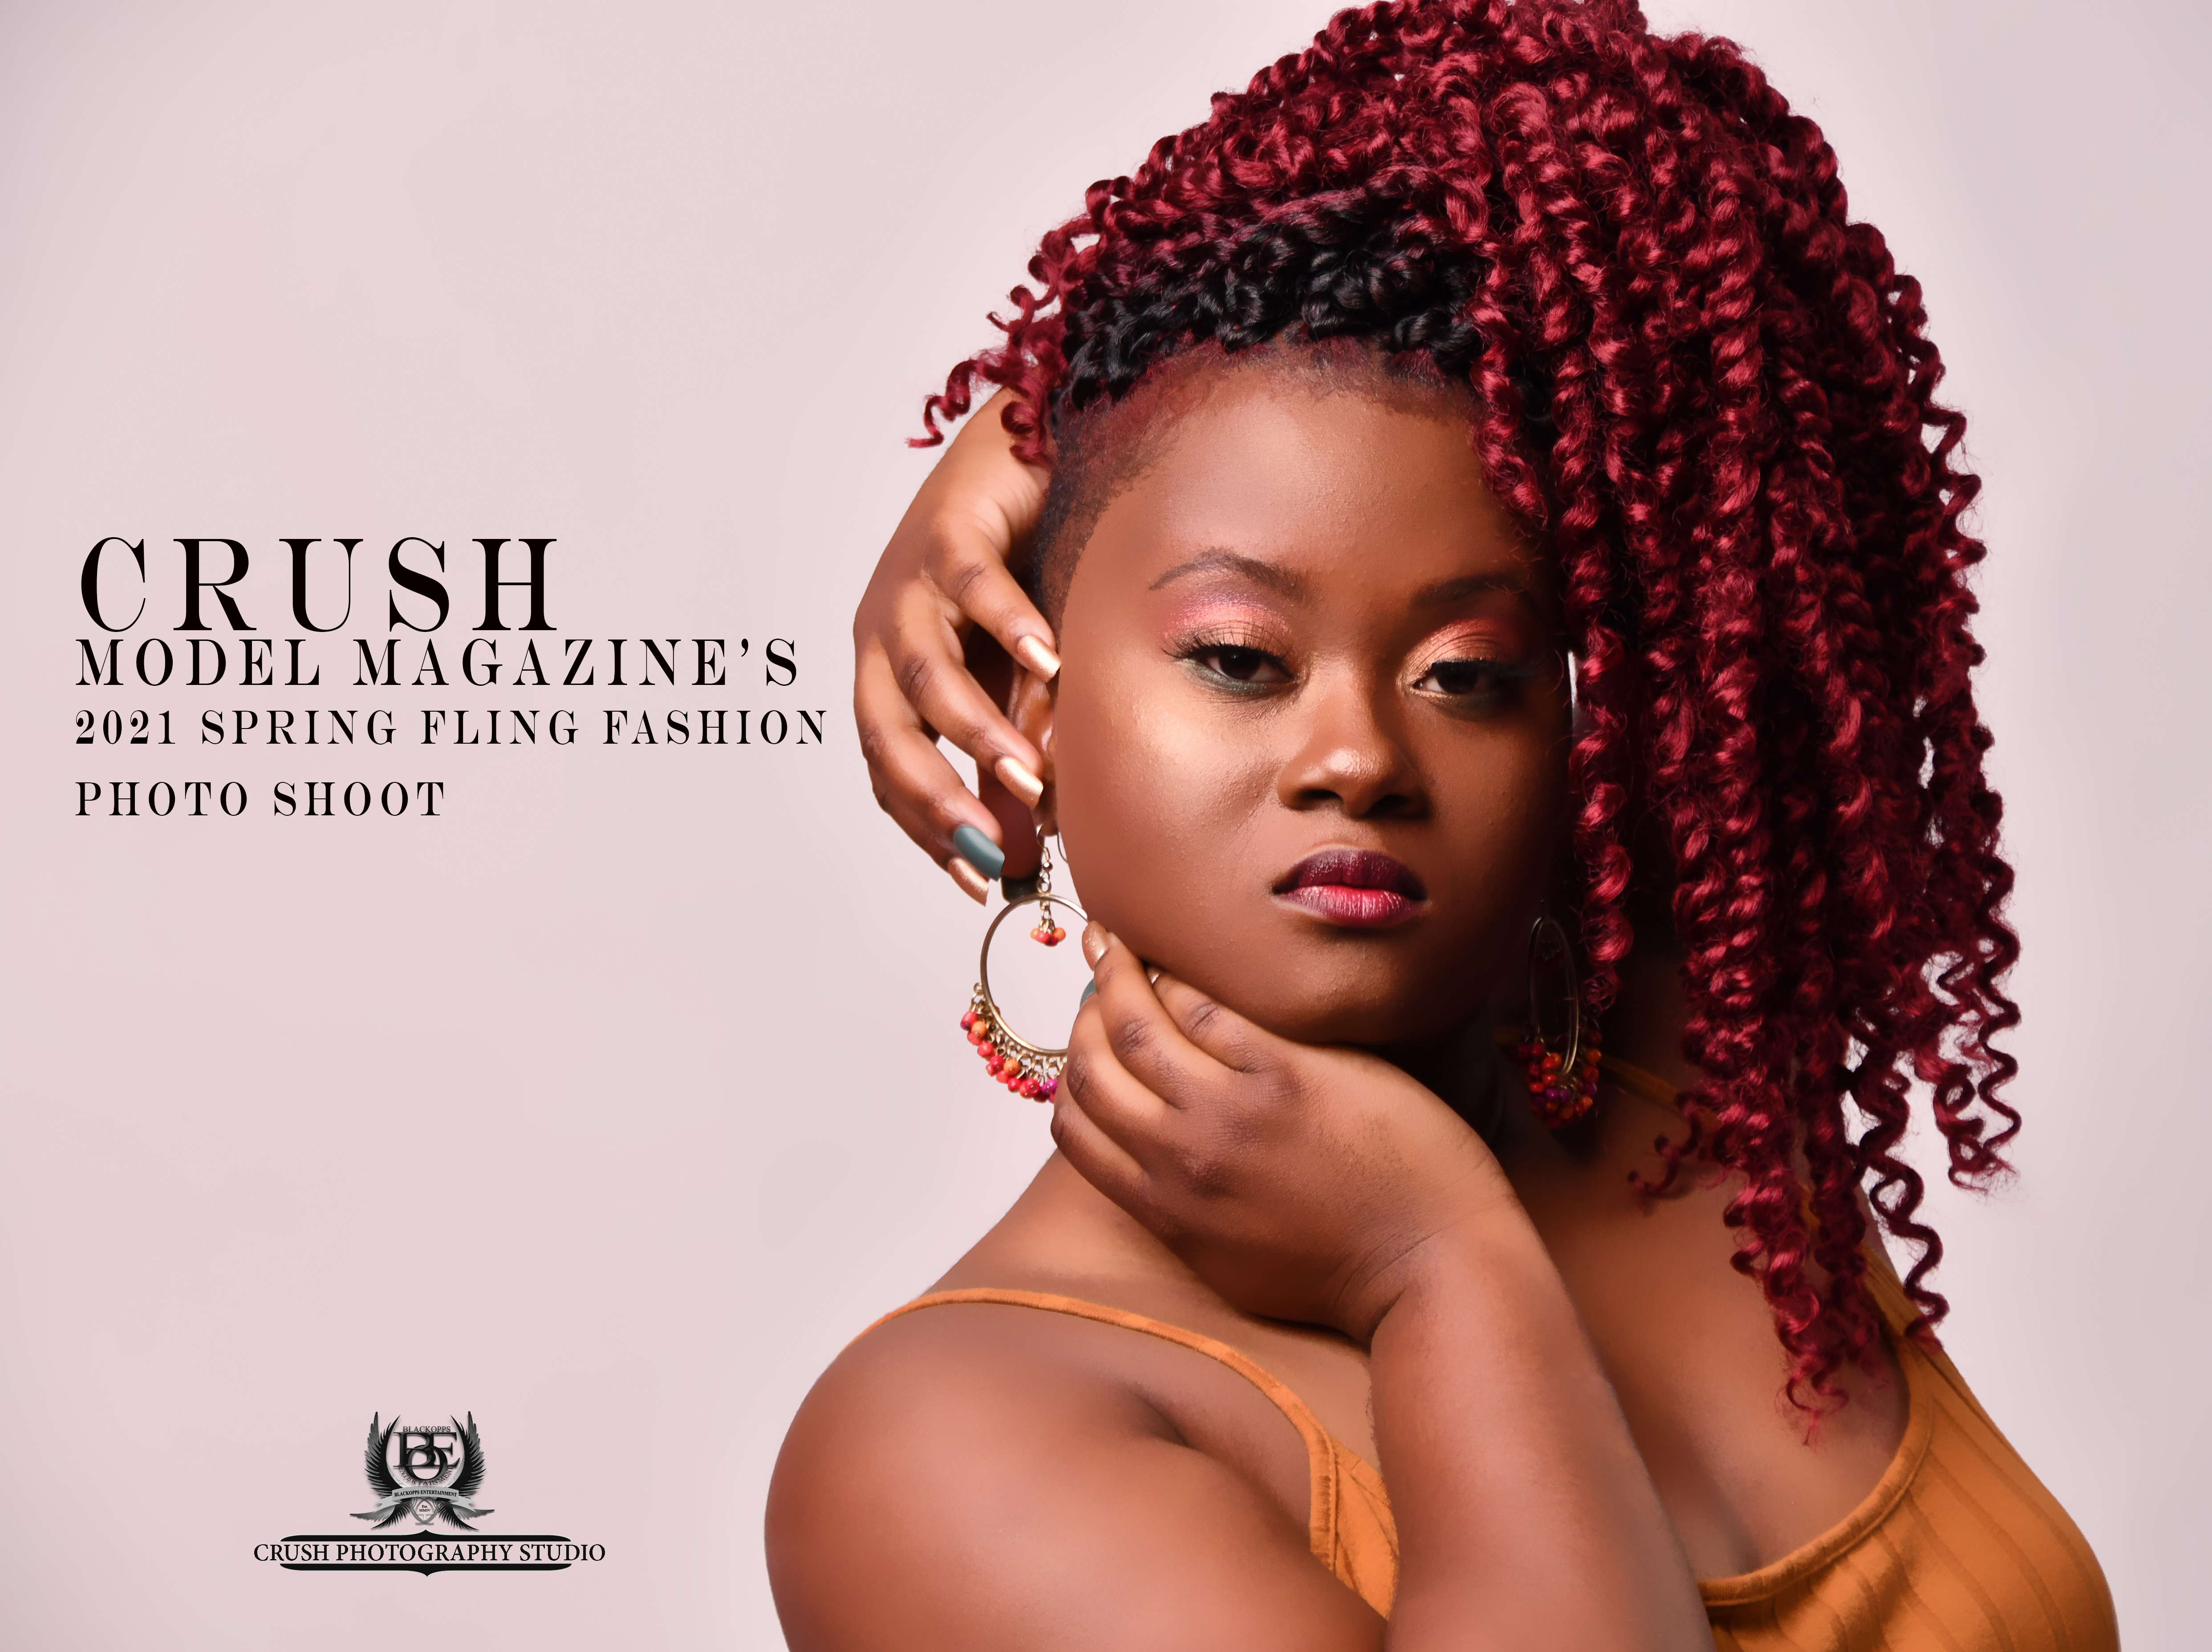 CRUSH Model Magazine’s 2021 Spring Fling Fashion Photo Shoot – Model: Phy Barker